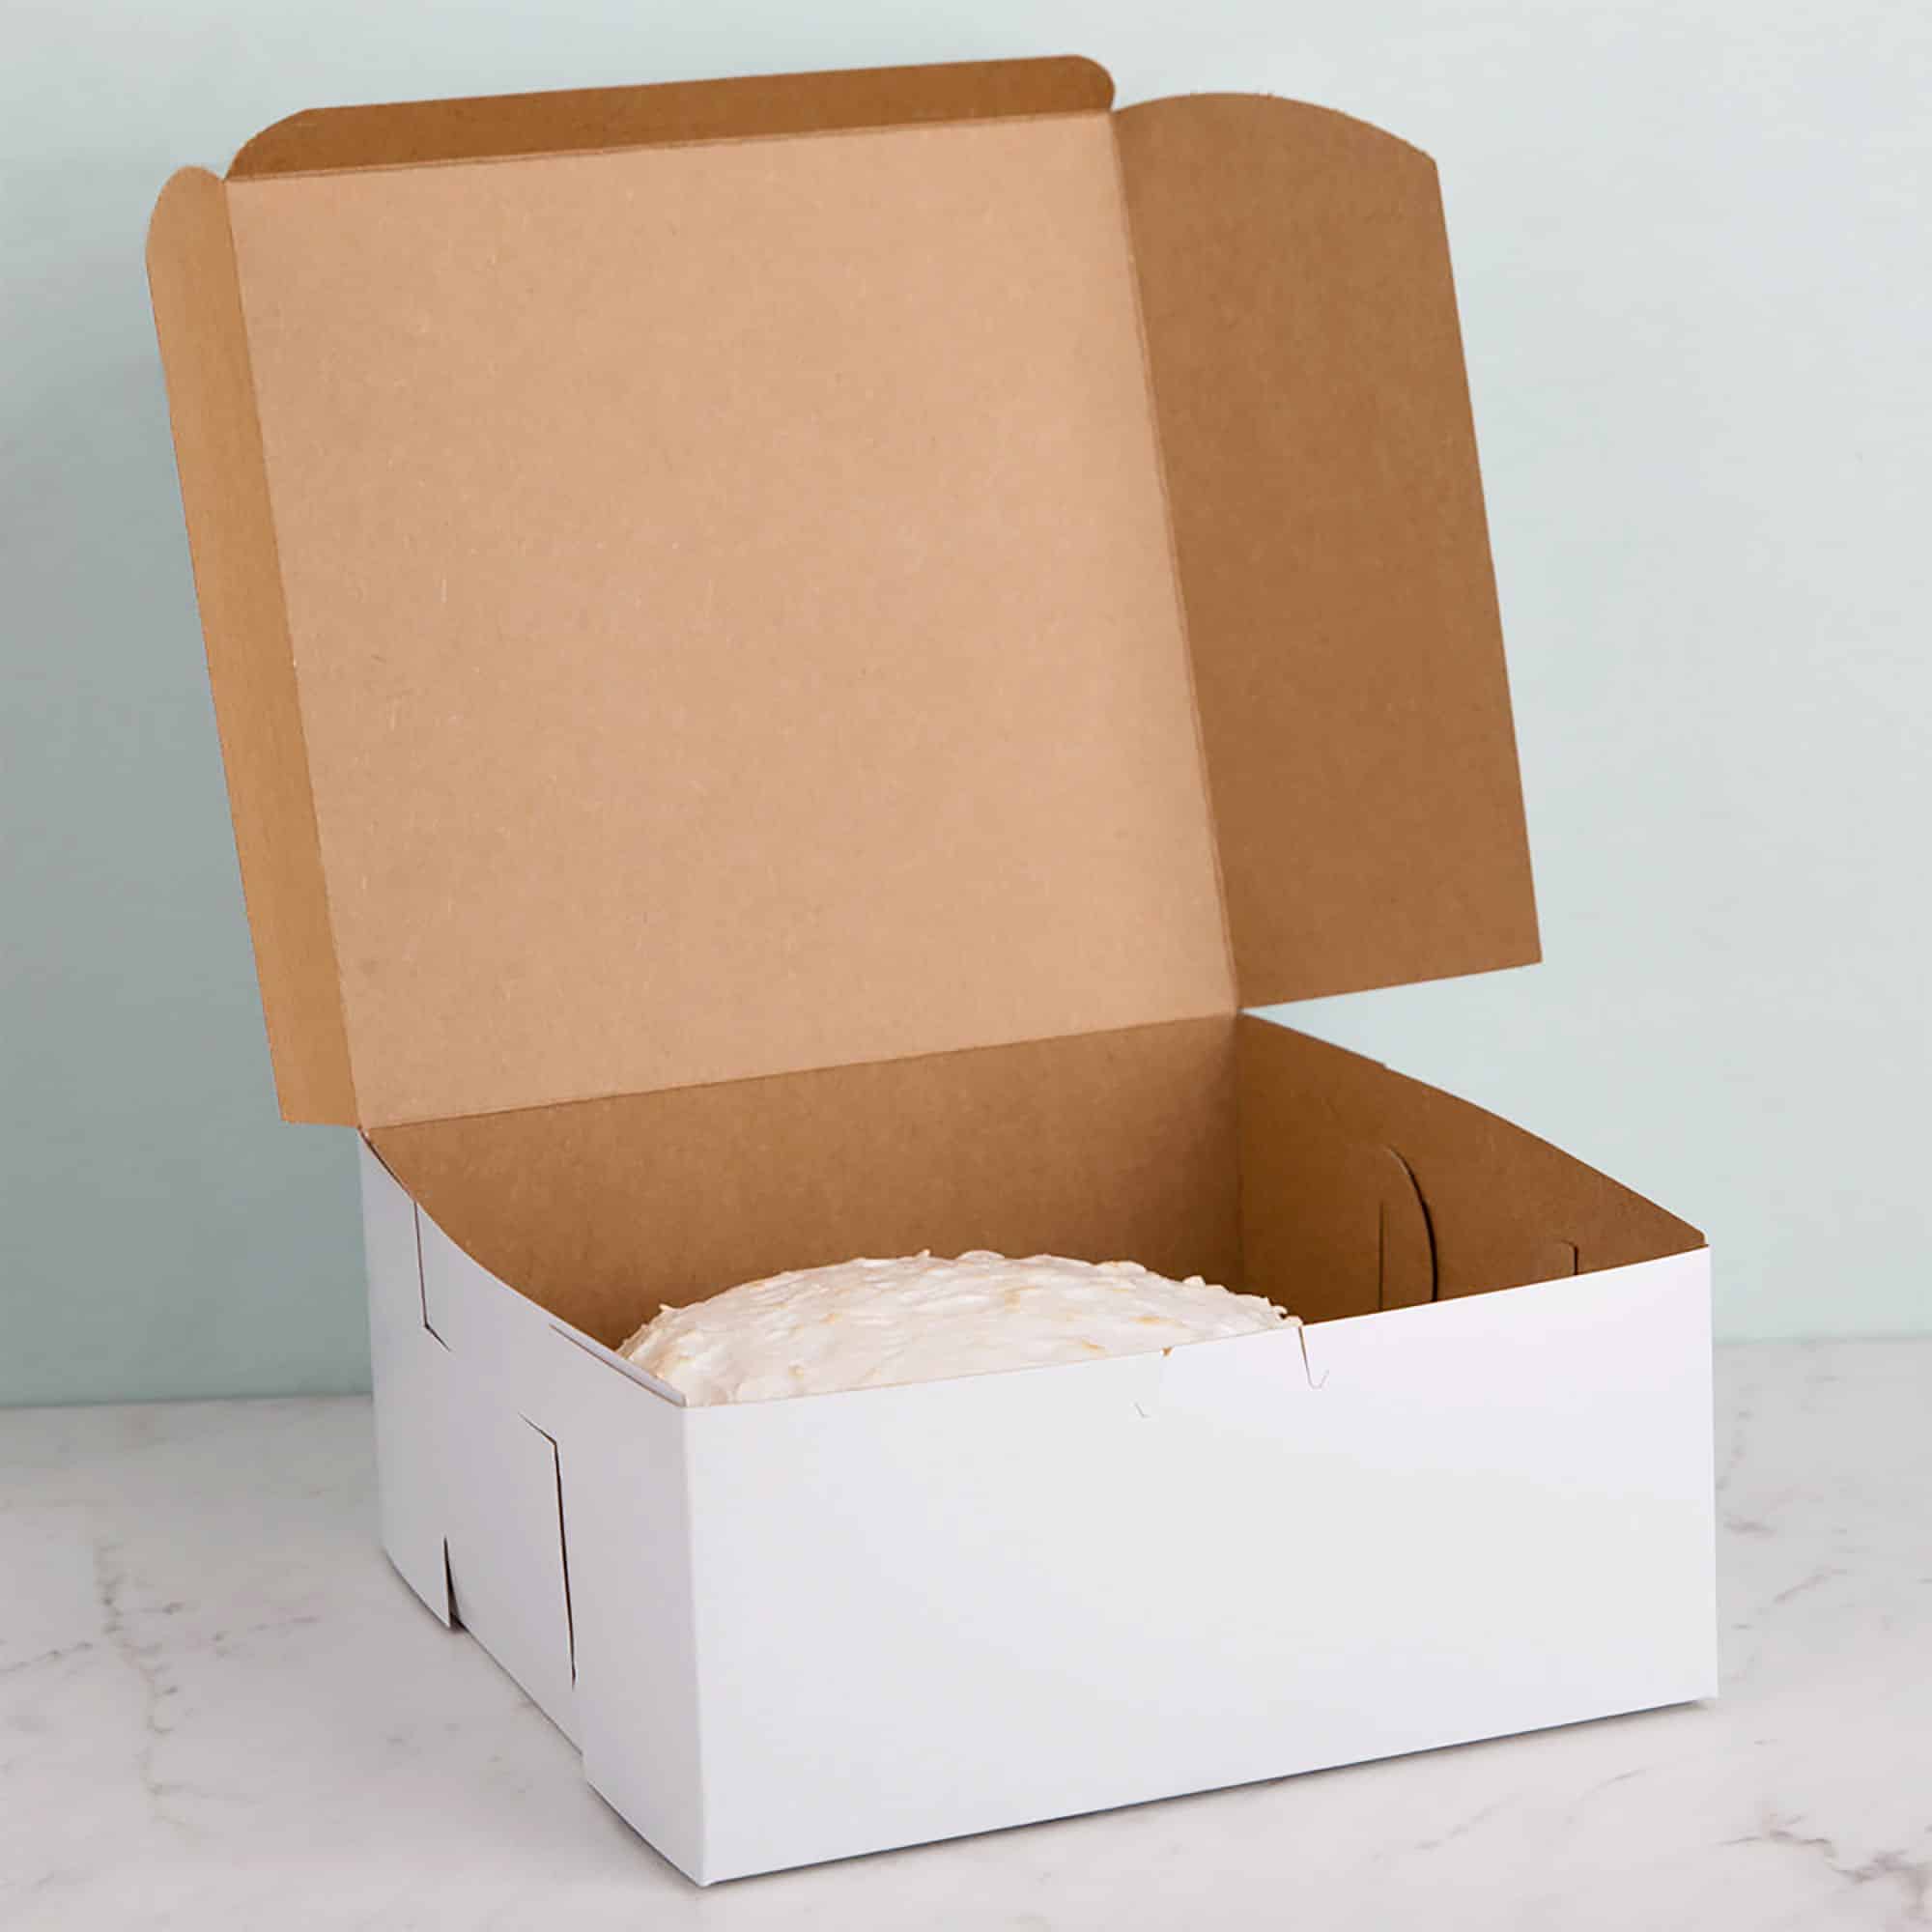 9"  x 9"  x 4"  White Cake / Bakery Box